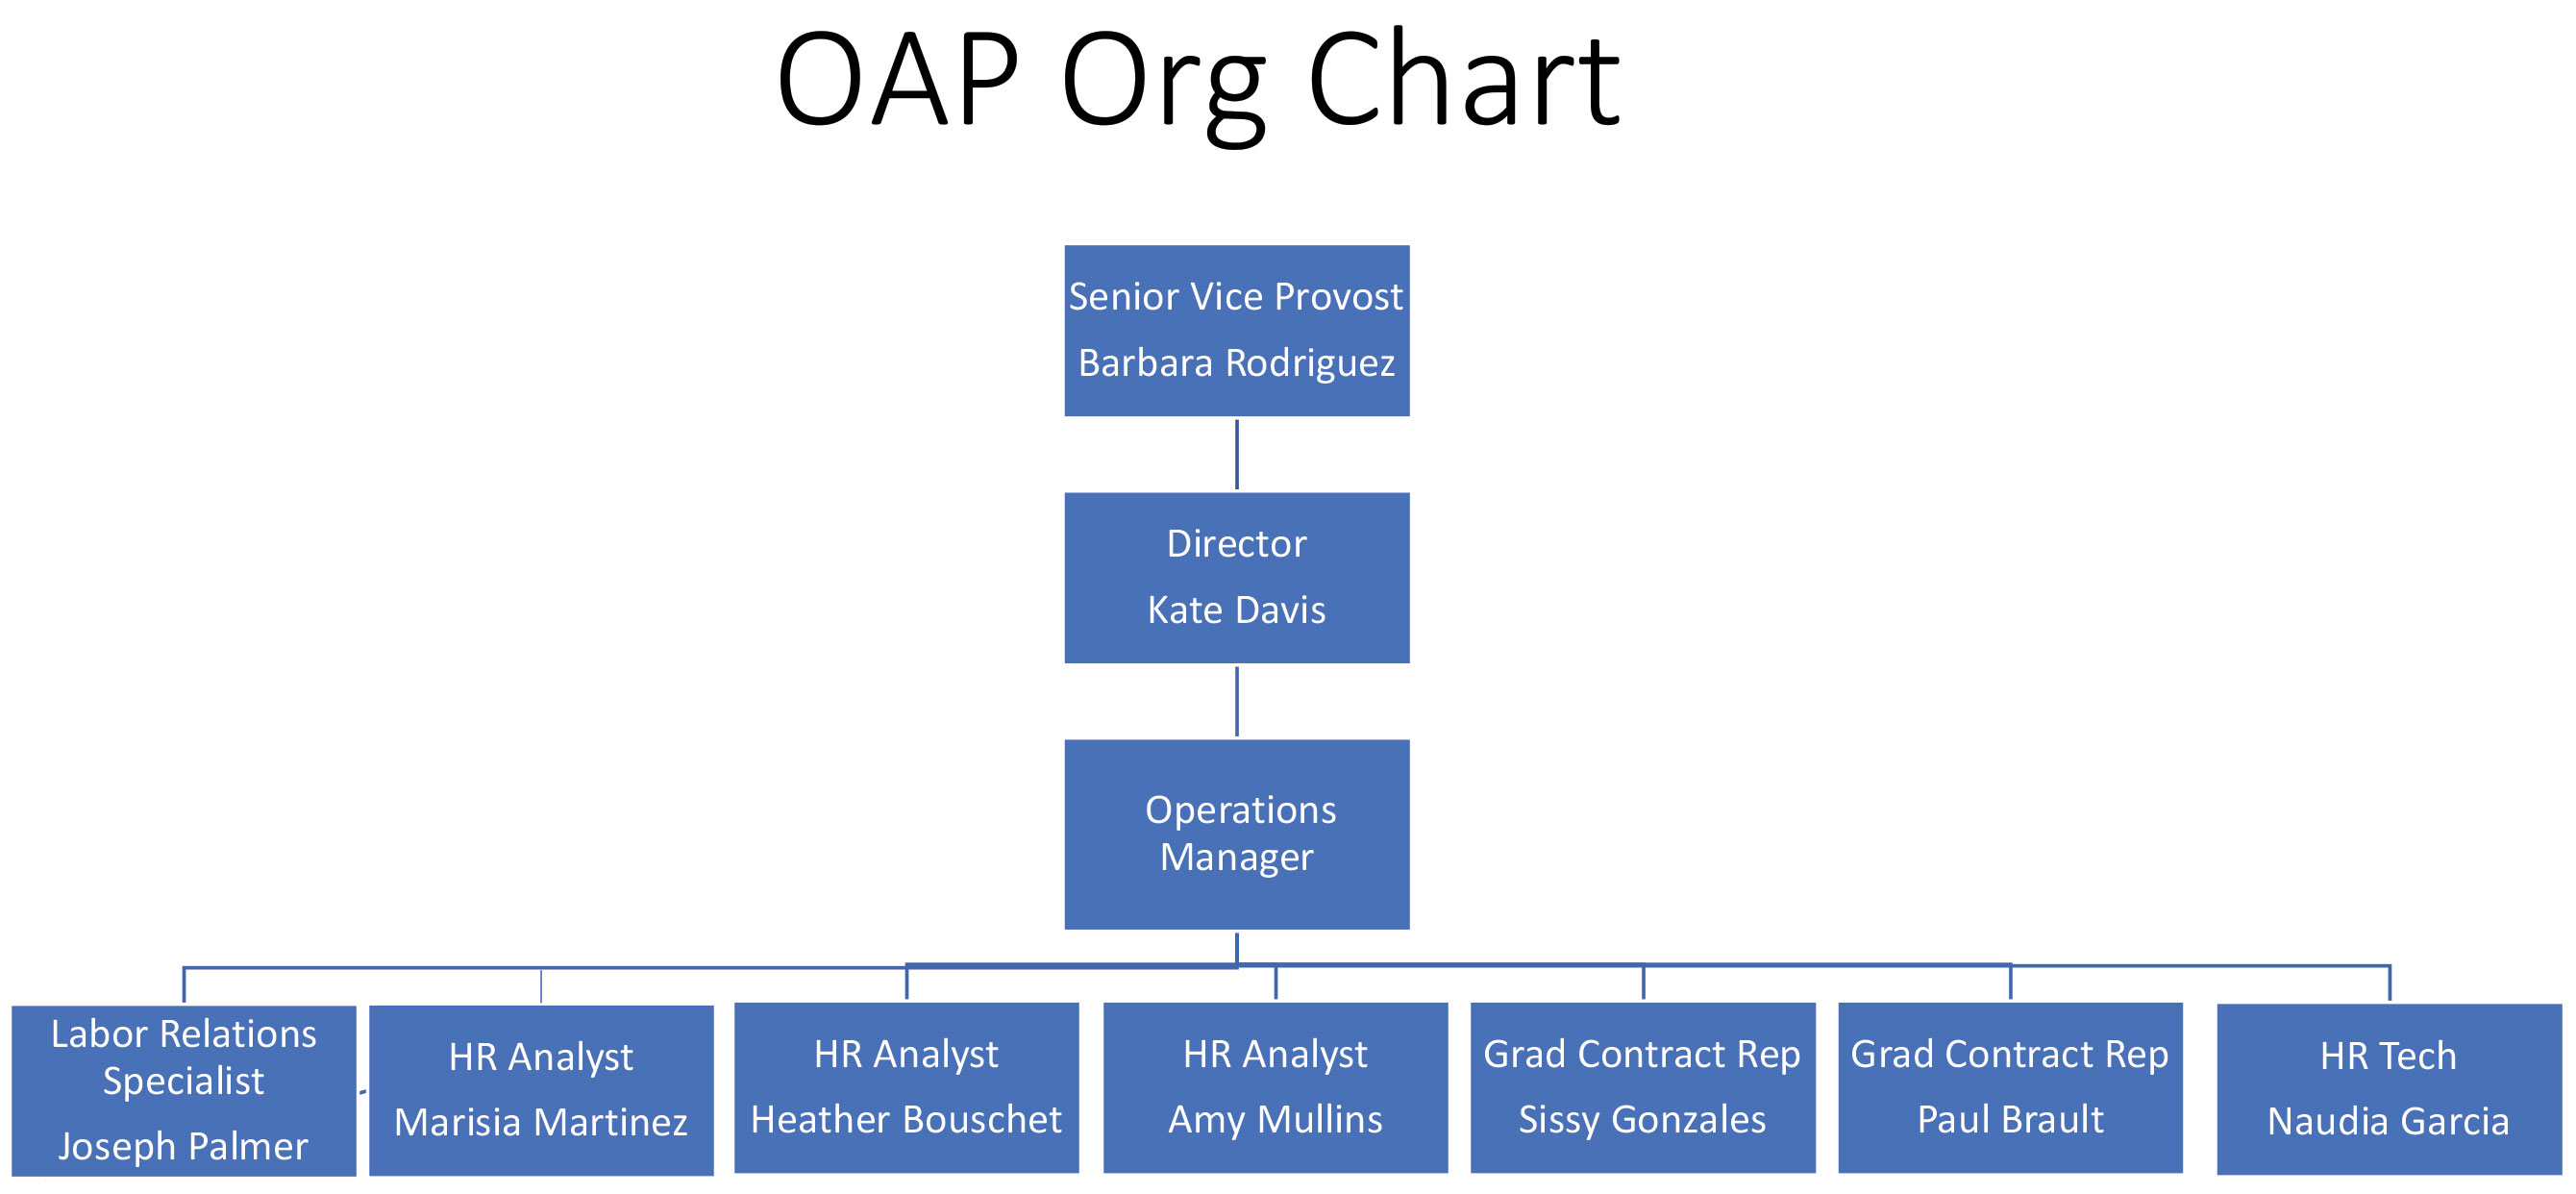 oap org chart 